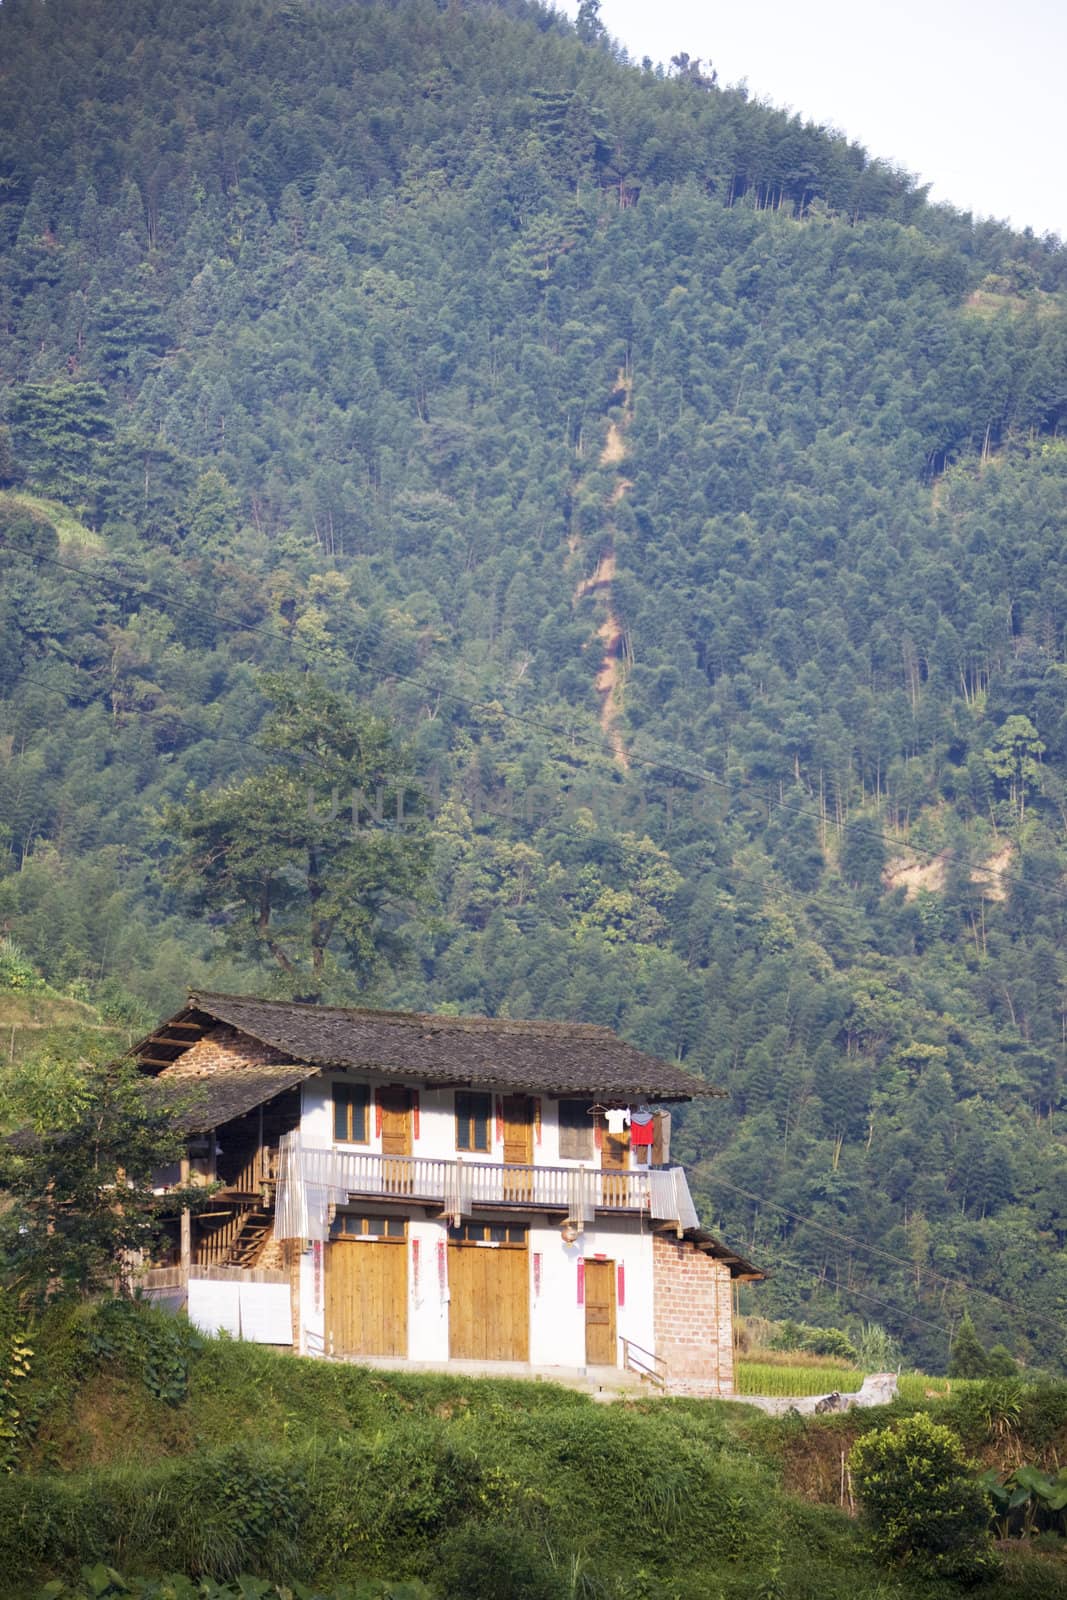 Image of a Chinese farmer's house at Longsheng, Guilin, China.